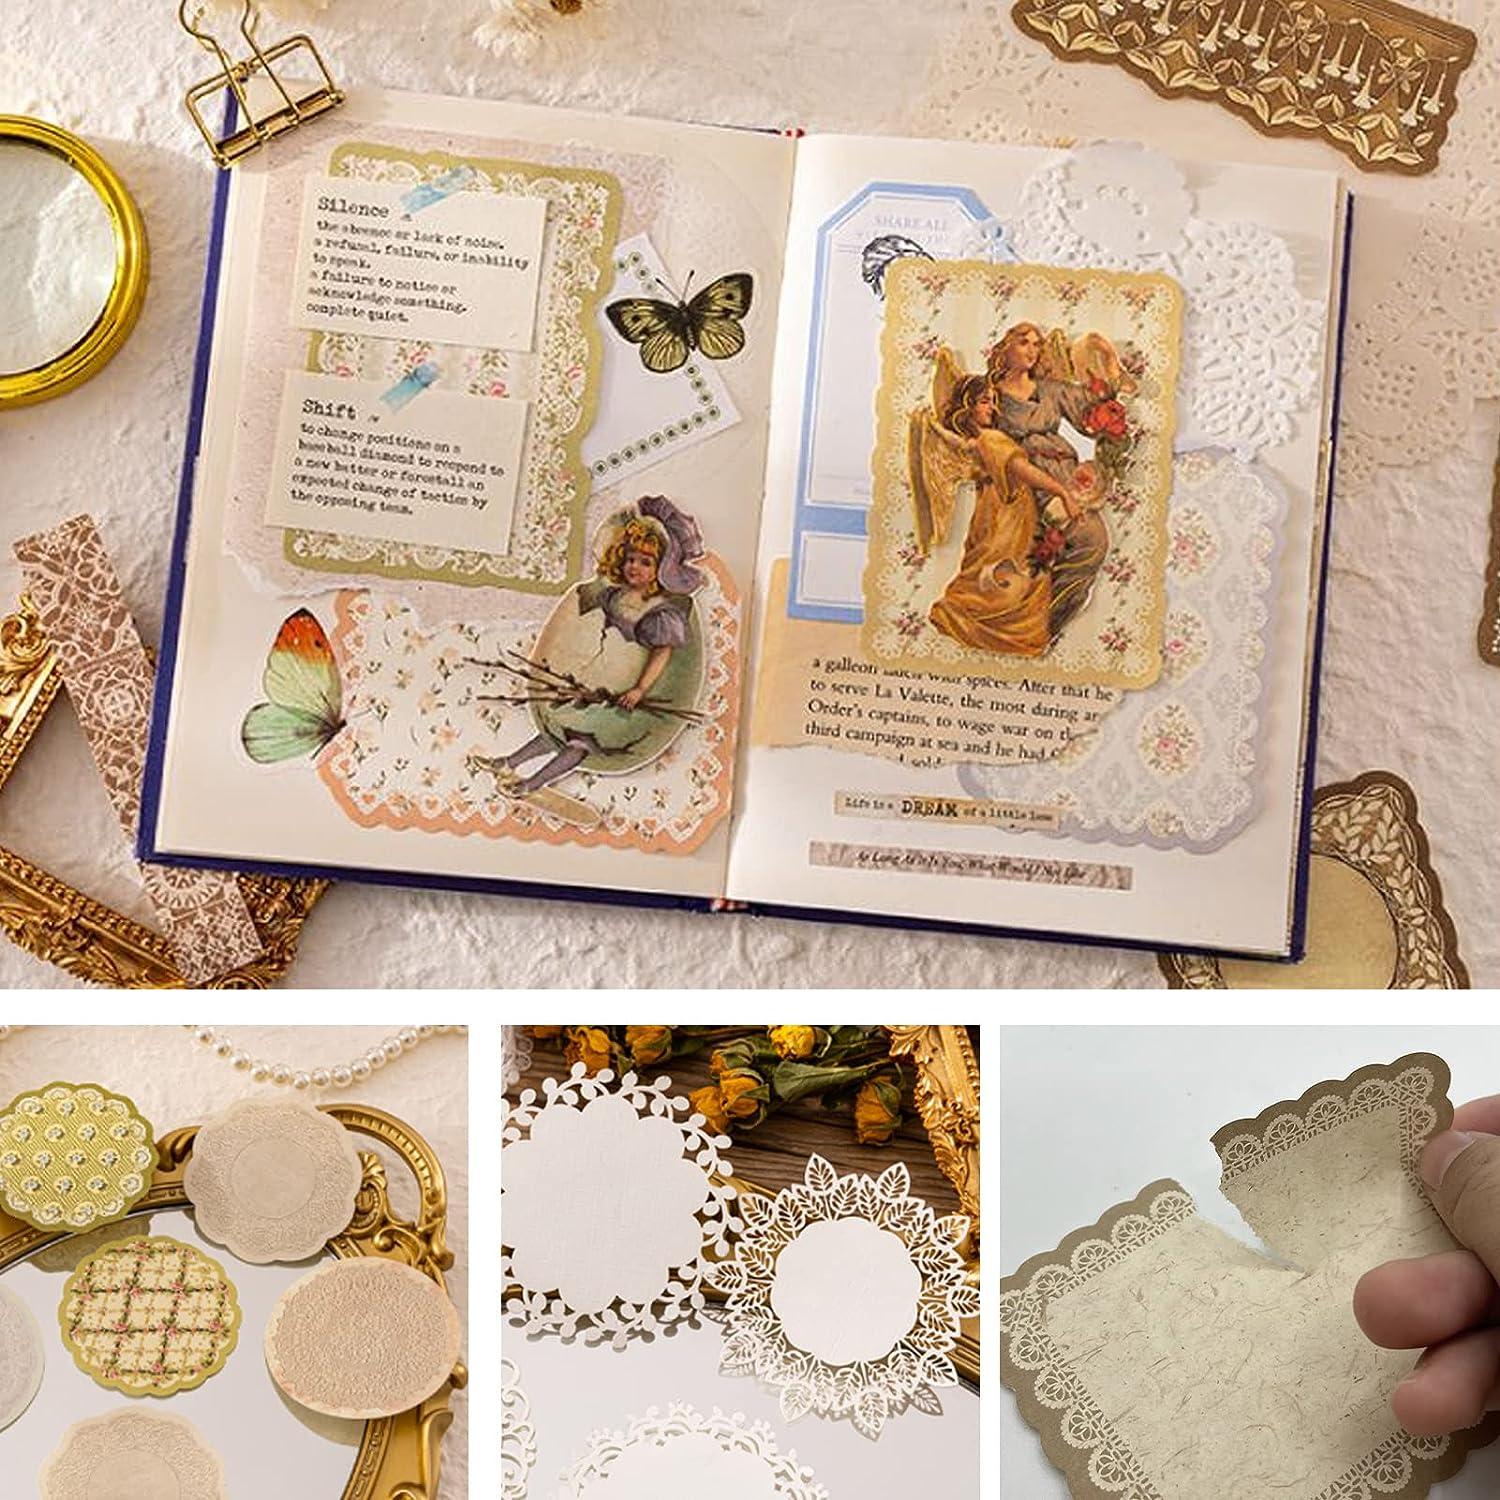  Vintage Scrapbook Paper Journaling Supplies Kit Translucent  Decorative Paper Gold Foil Aesthetic Paper for Scrapbooking Junk Journal  Supplies Clearance - 90 Sheets : Arts, Crafts & Sewing